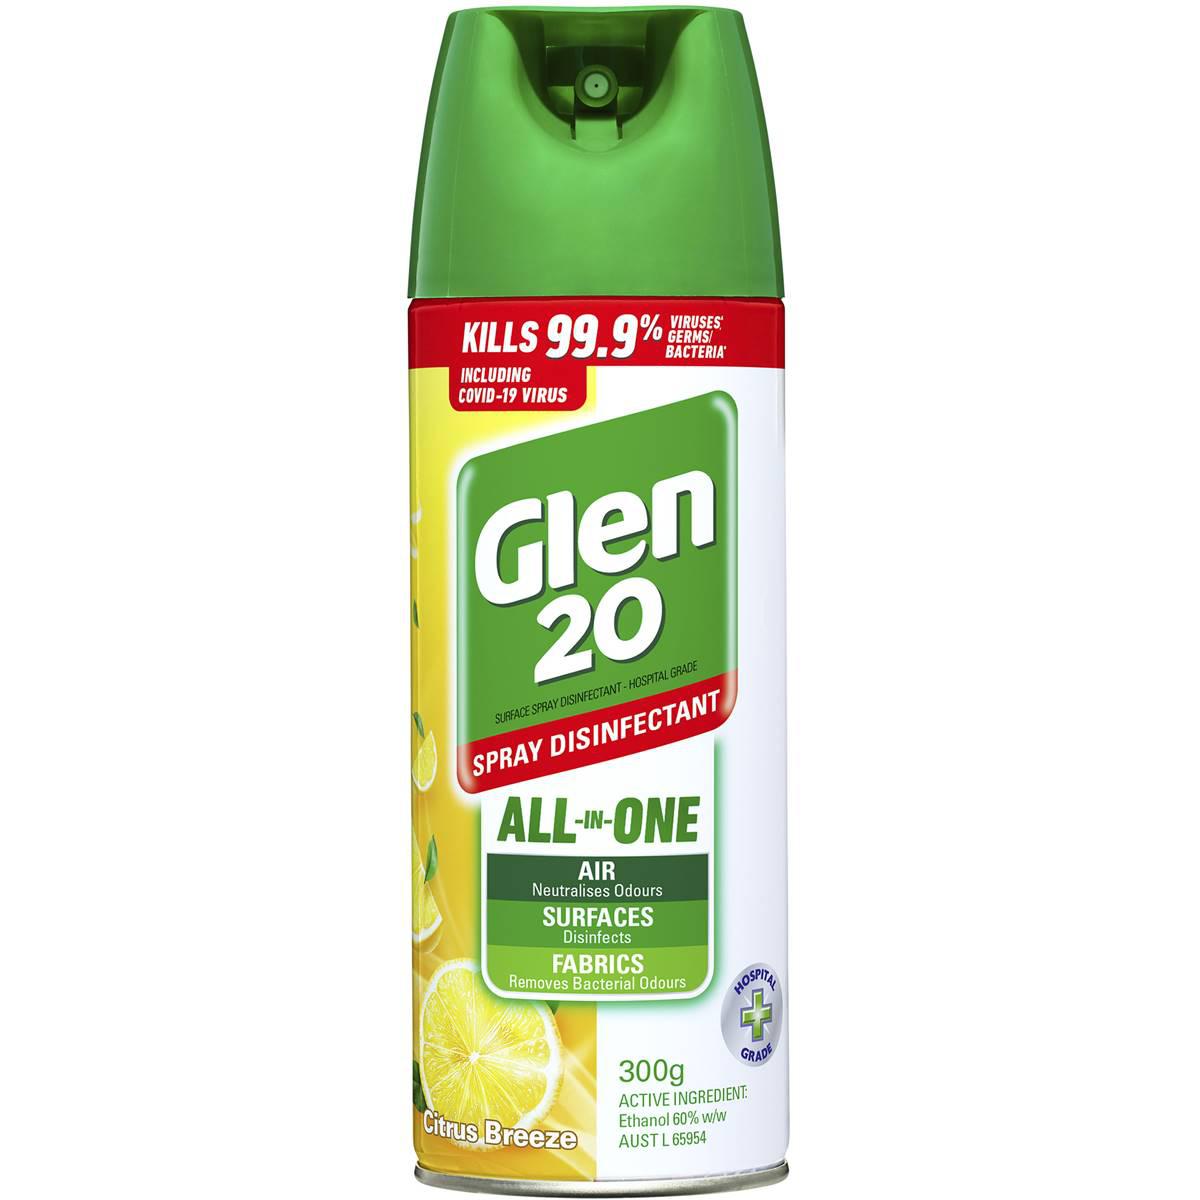 Glen 20 Disinfectant Spray All-in-one Citrus Breeze 300g